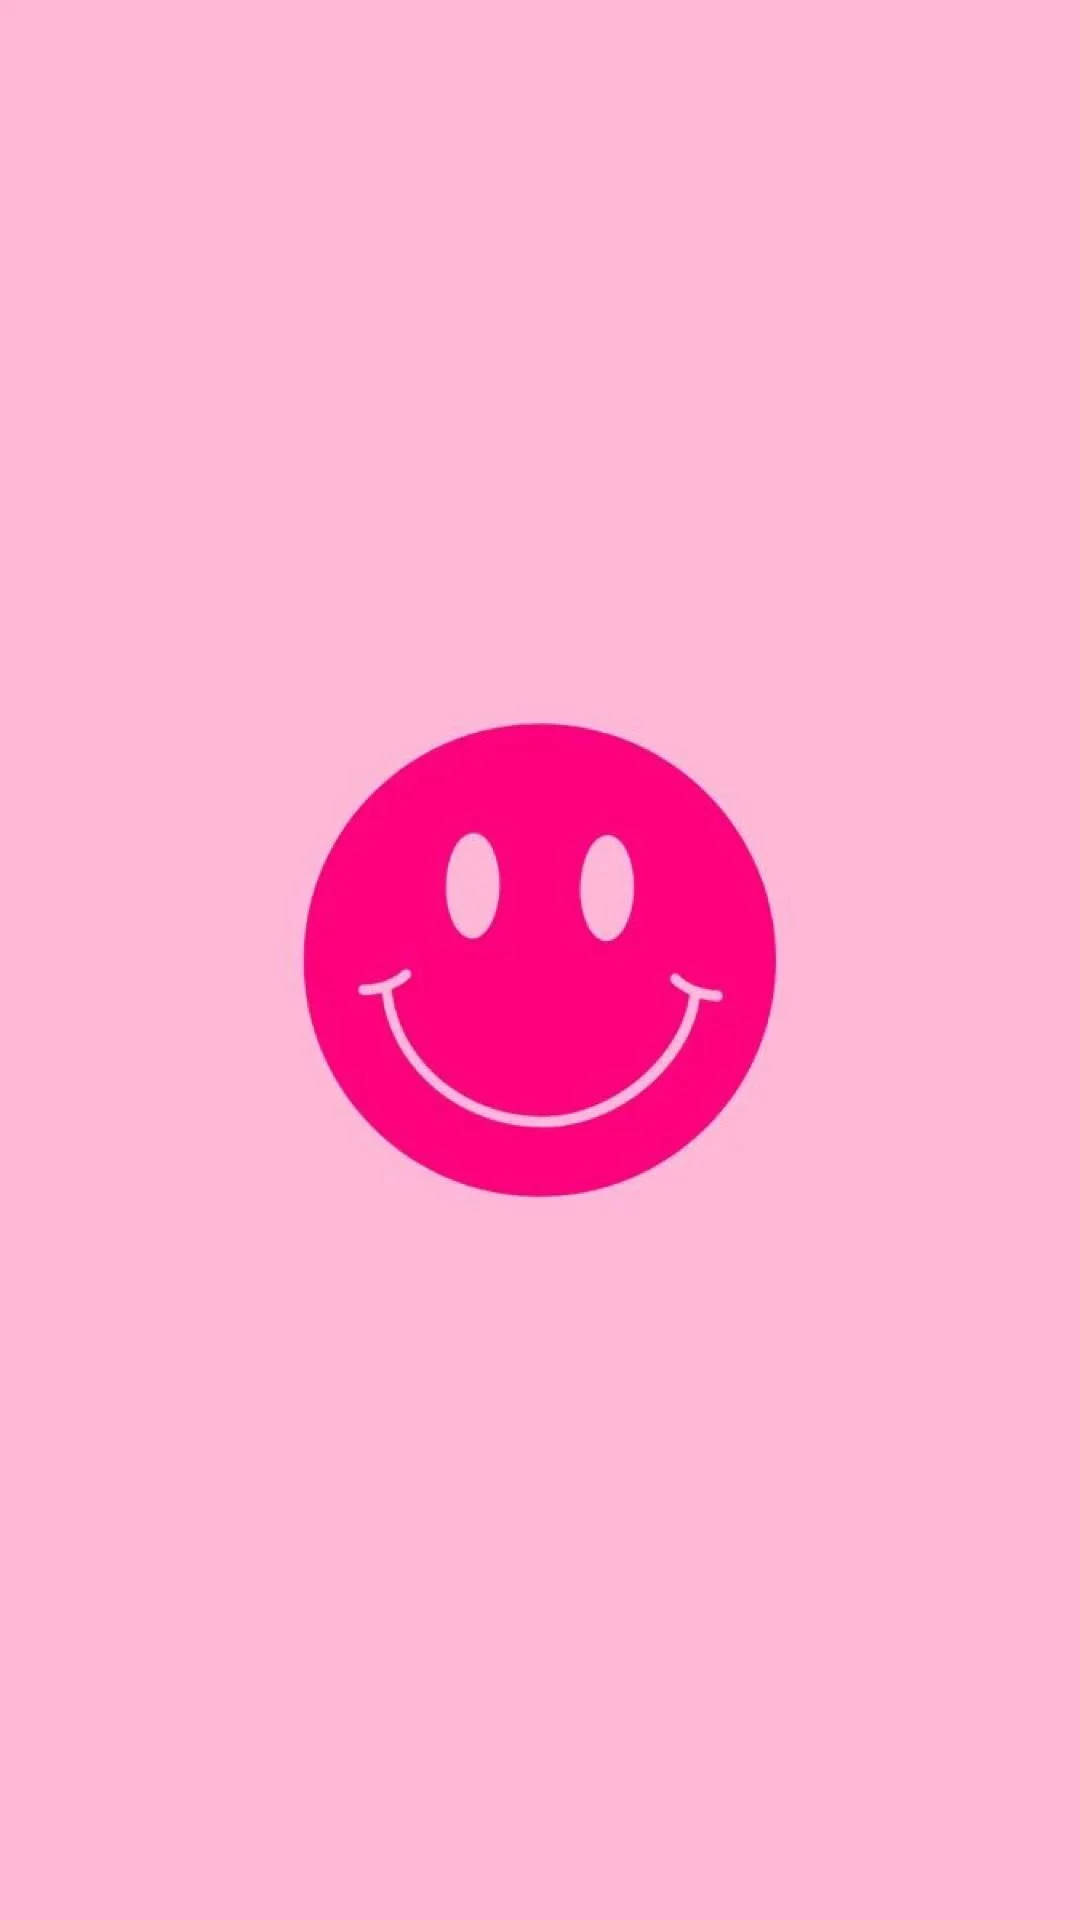 Minimalist Preppy Pink Smiley Face Wallpaper